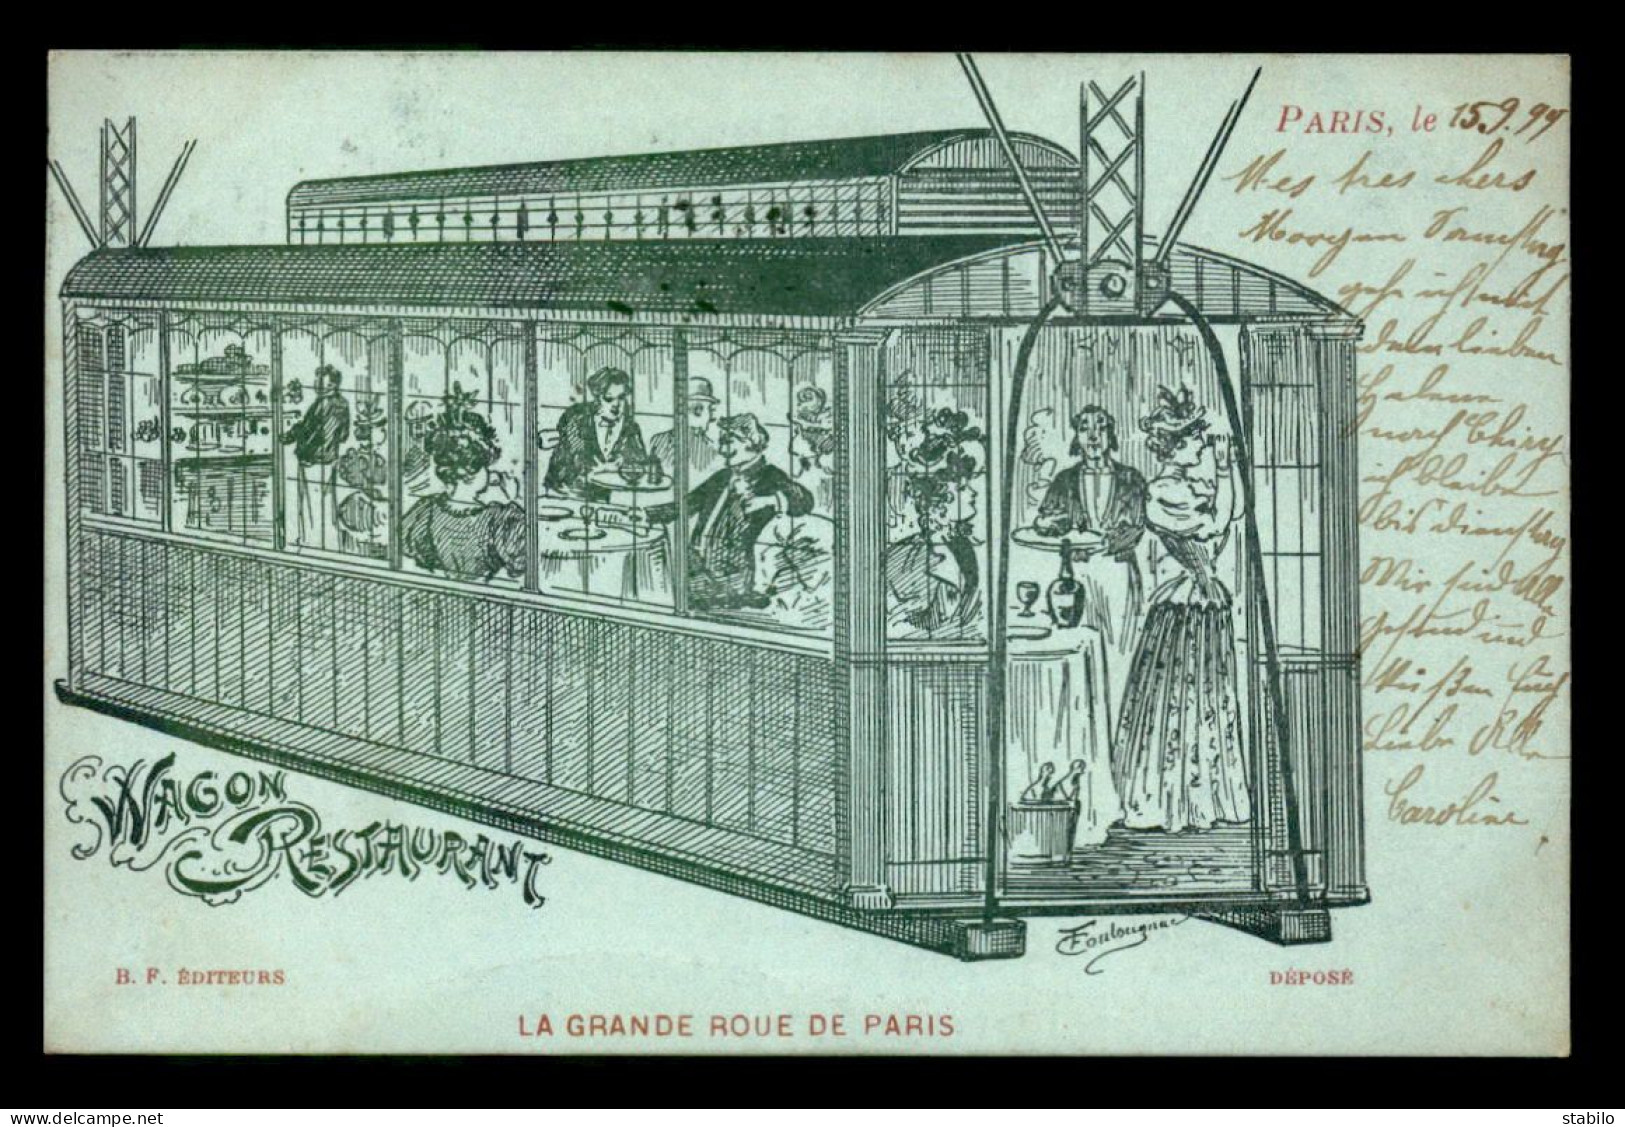 75 - PARIS - ILLUSTRATEURS - LA GRANDE ROUE - WAGON-RESTAURANT - CARTE VOYAGE EN 1899 - Sonstige Sehenswürdigkeiten